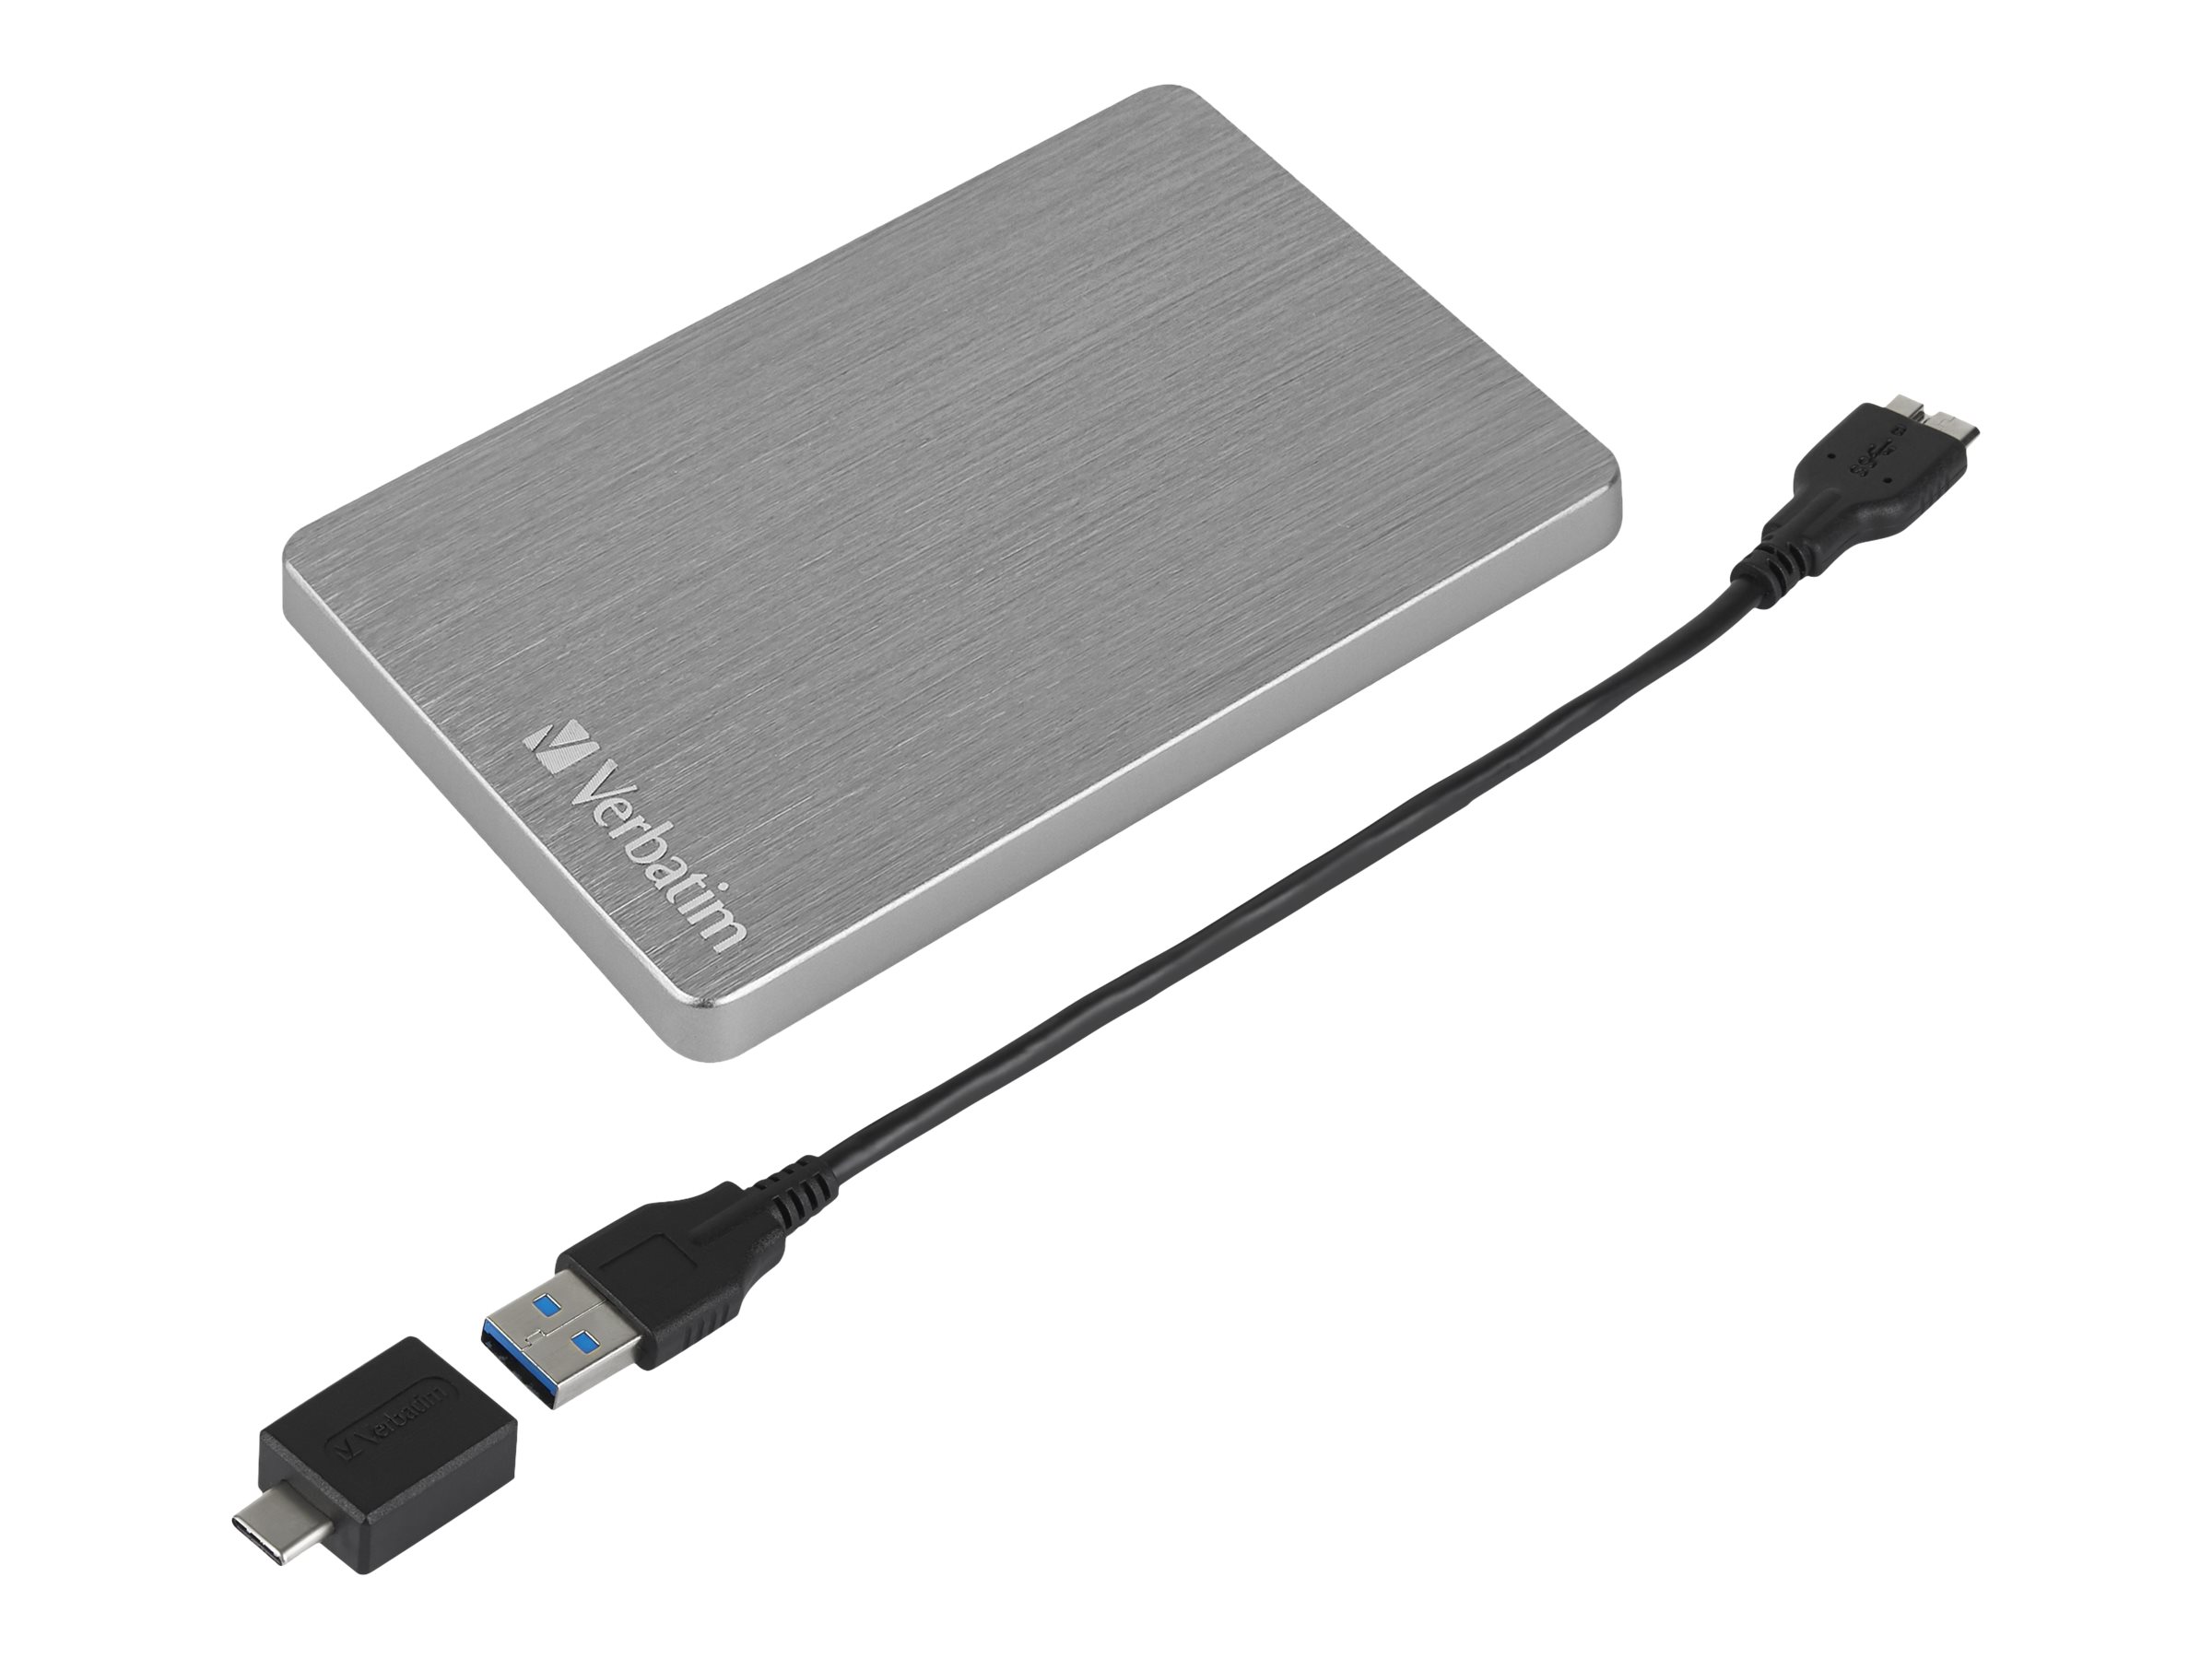 W&T USB-Server Megabit 2.0 (53665)